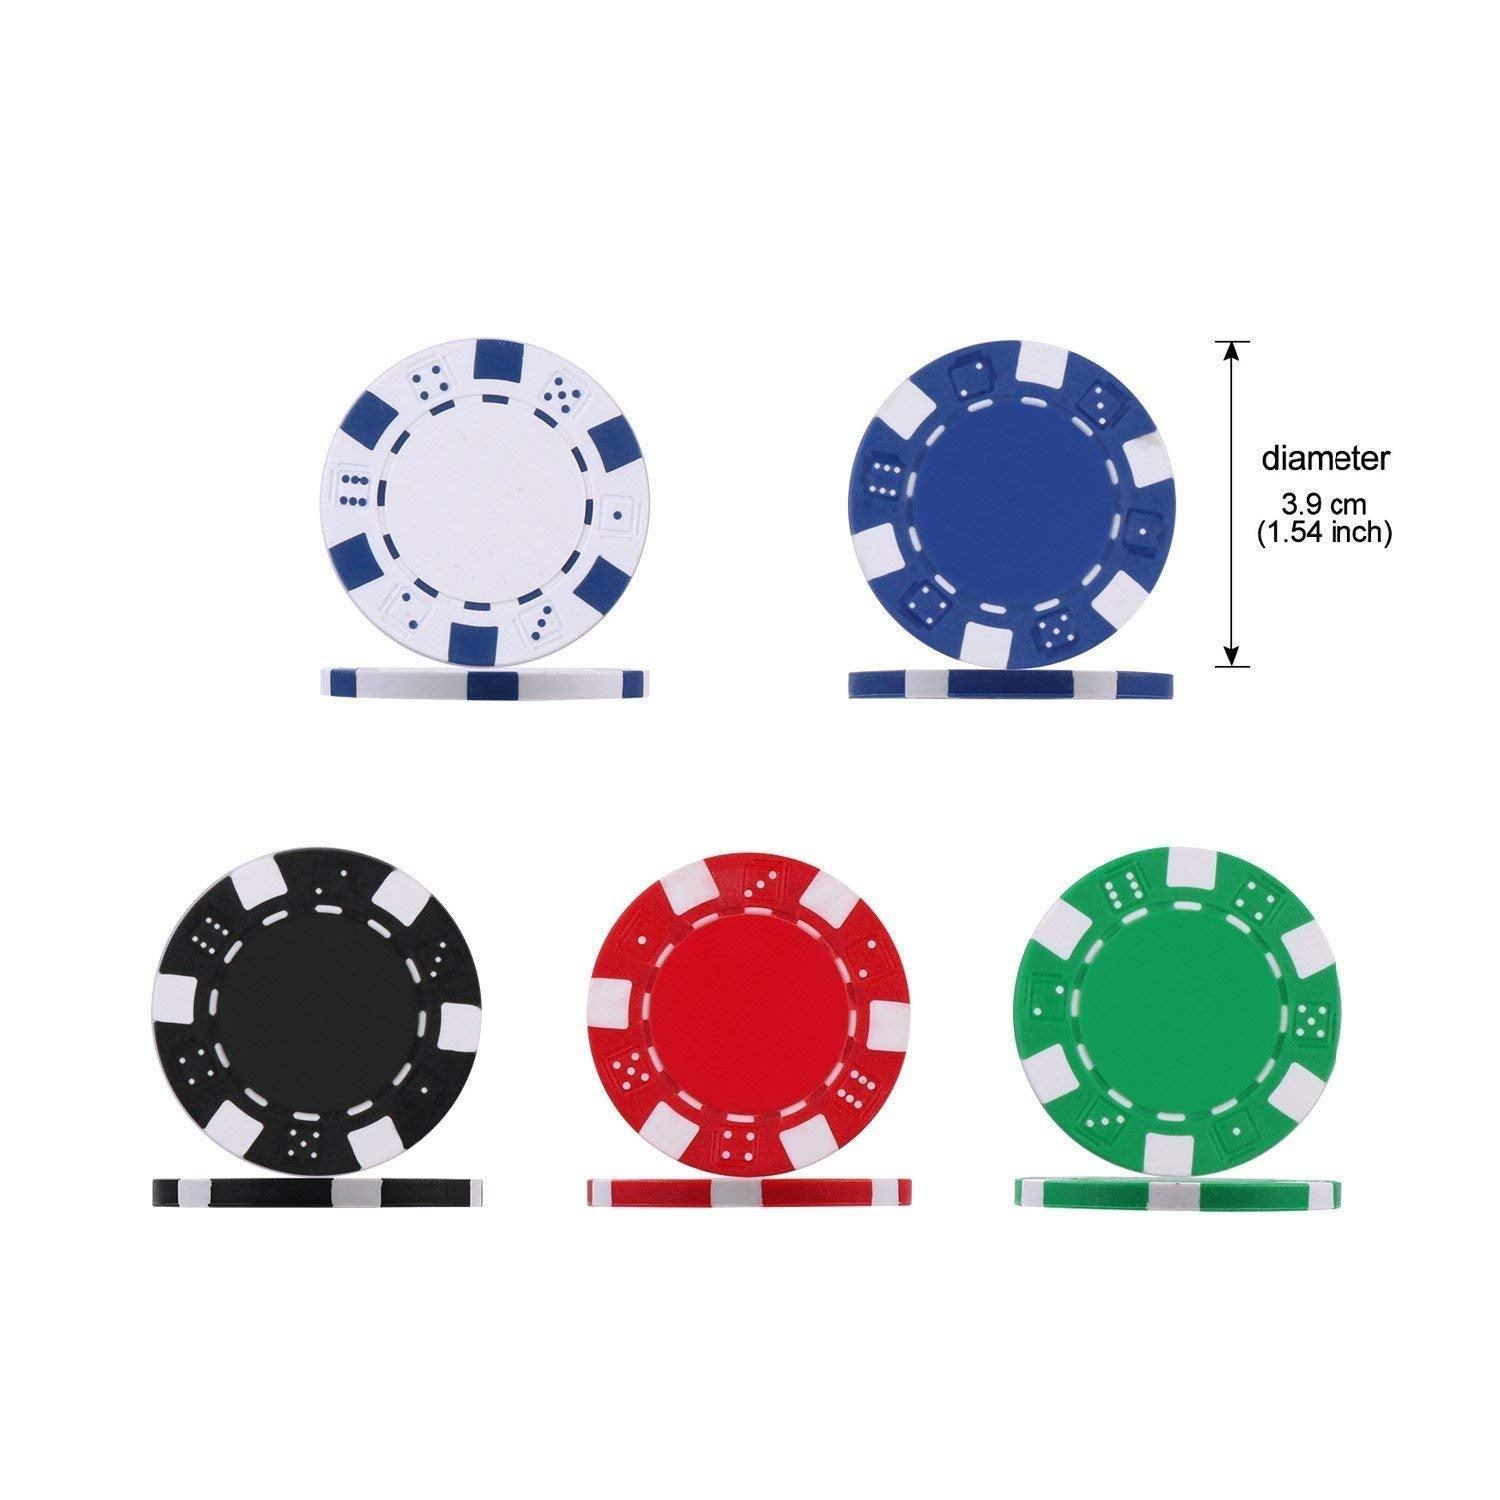 Poker Game Set 300 Pcs (Aluminum Case Safe Pack) - 11Cart